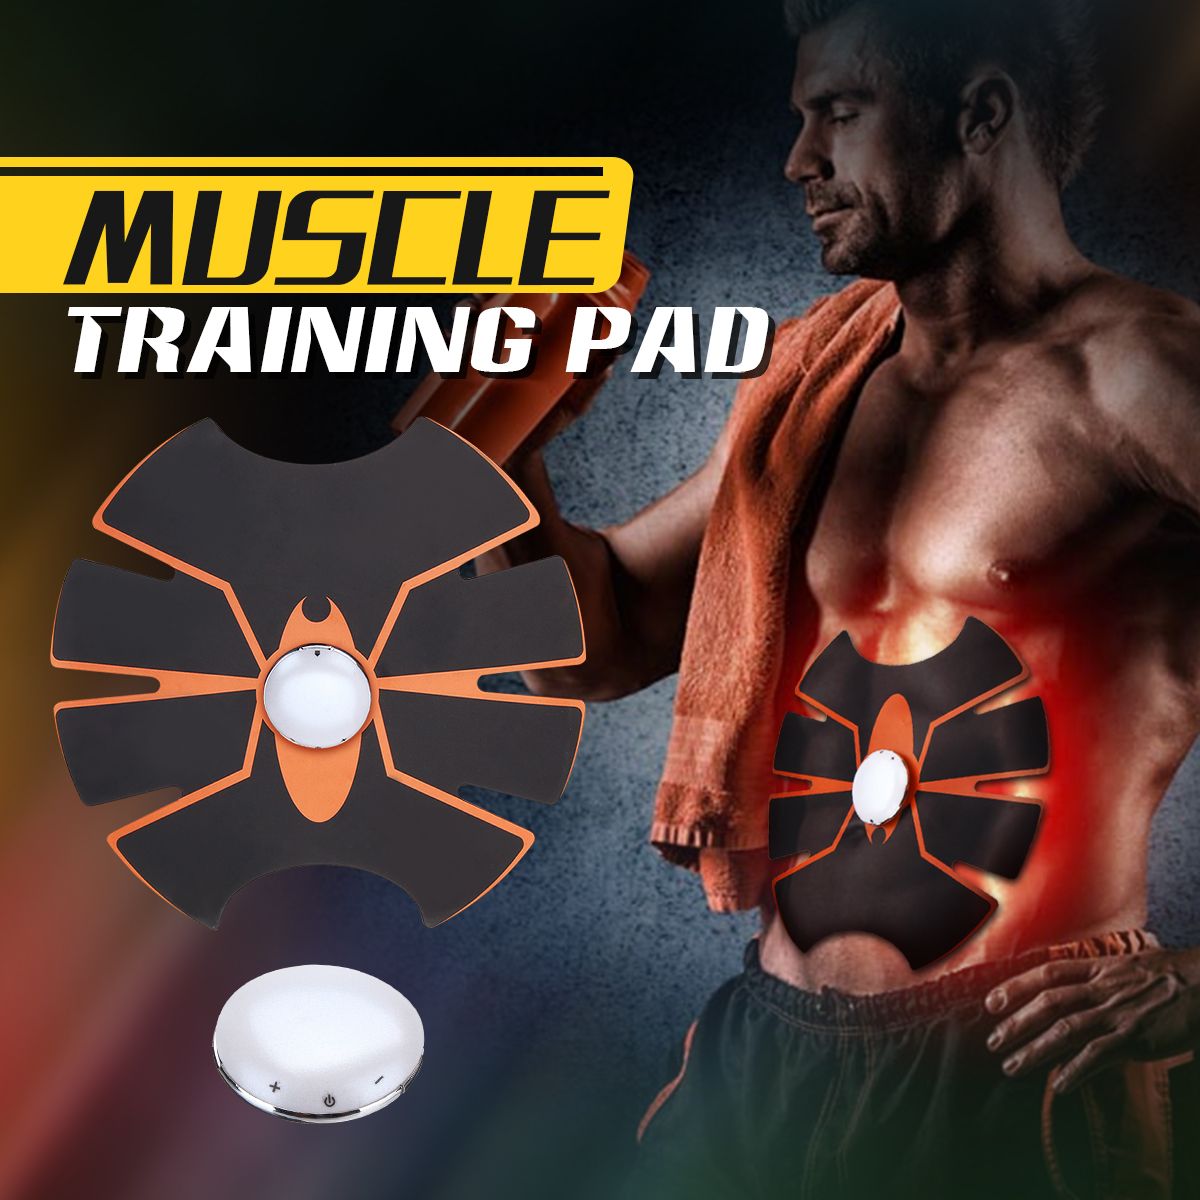 Abdominal-Muscle-Trainer-Pad-Fitness-Trainning-Belt-Body-Building-Fitness-Abdomen-Sticker-1642923-2